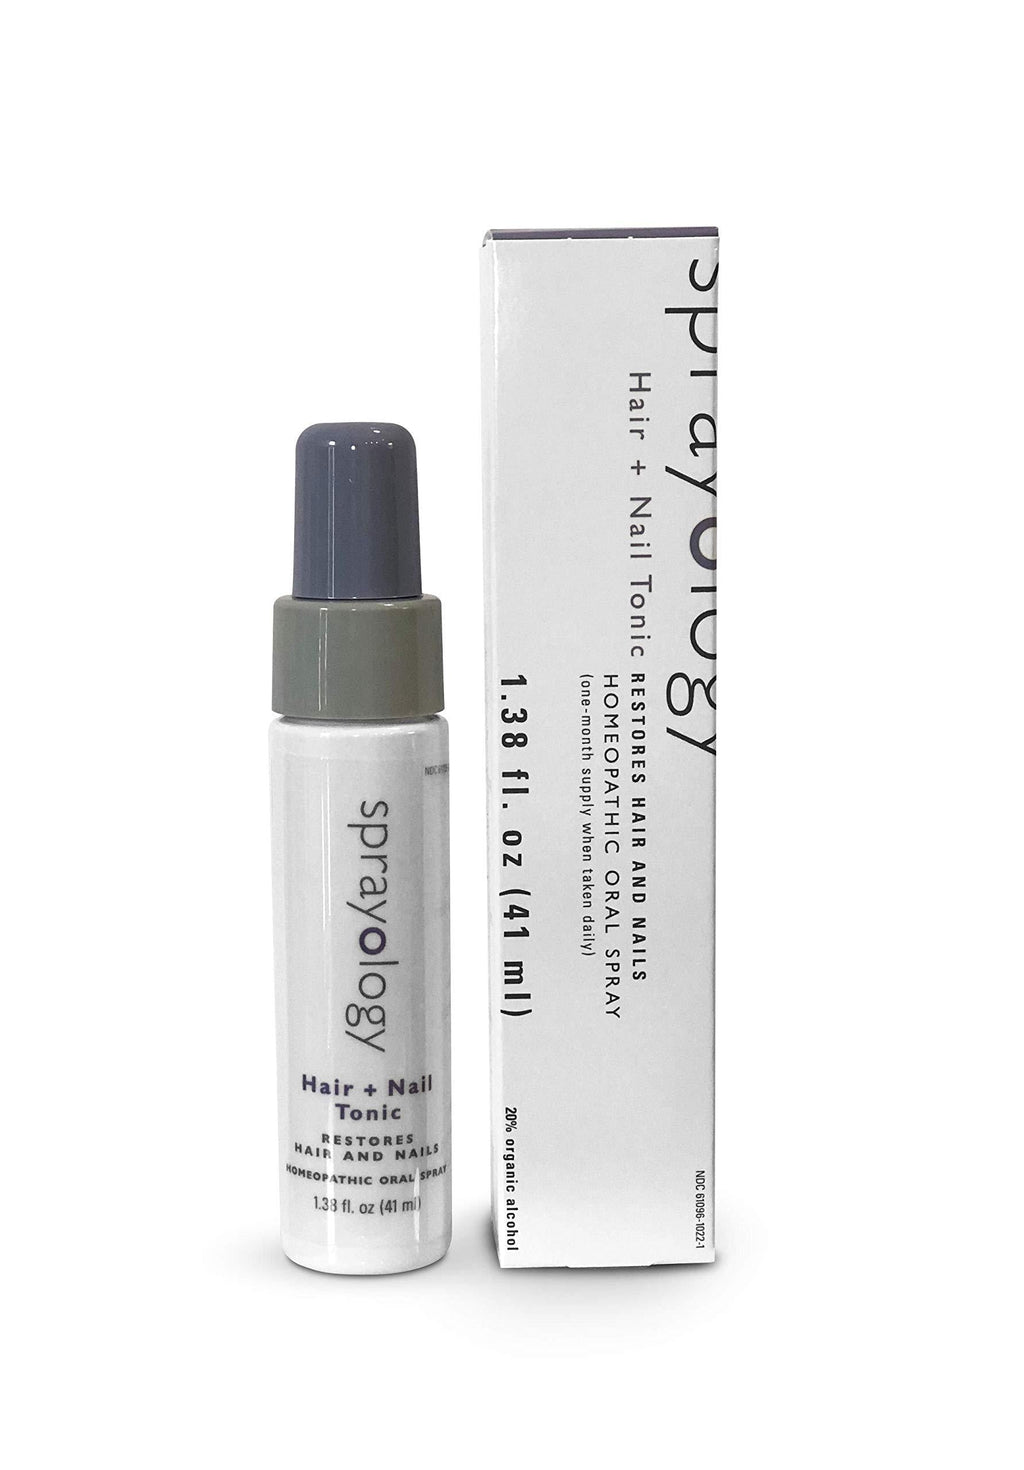 [Australia] - Sprayology Hair & Nail Tonic - Homeopathic Oral Spray for Healthy Hair and Nails - Natural Hair Growth Treatment (1.38 fl oz) 